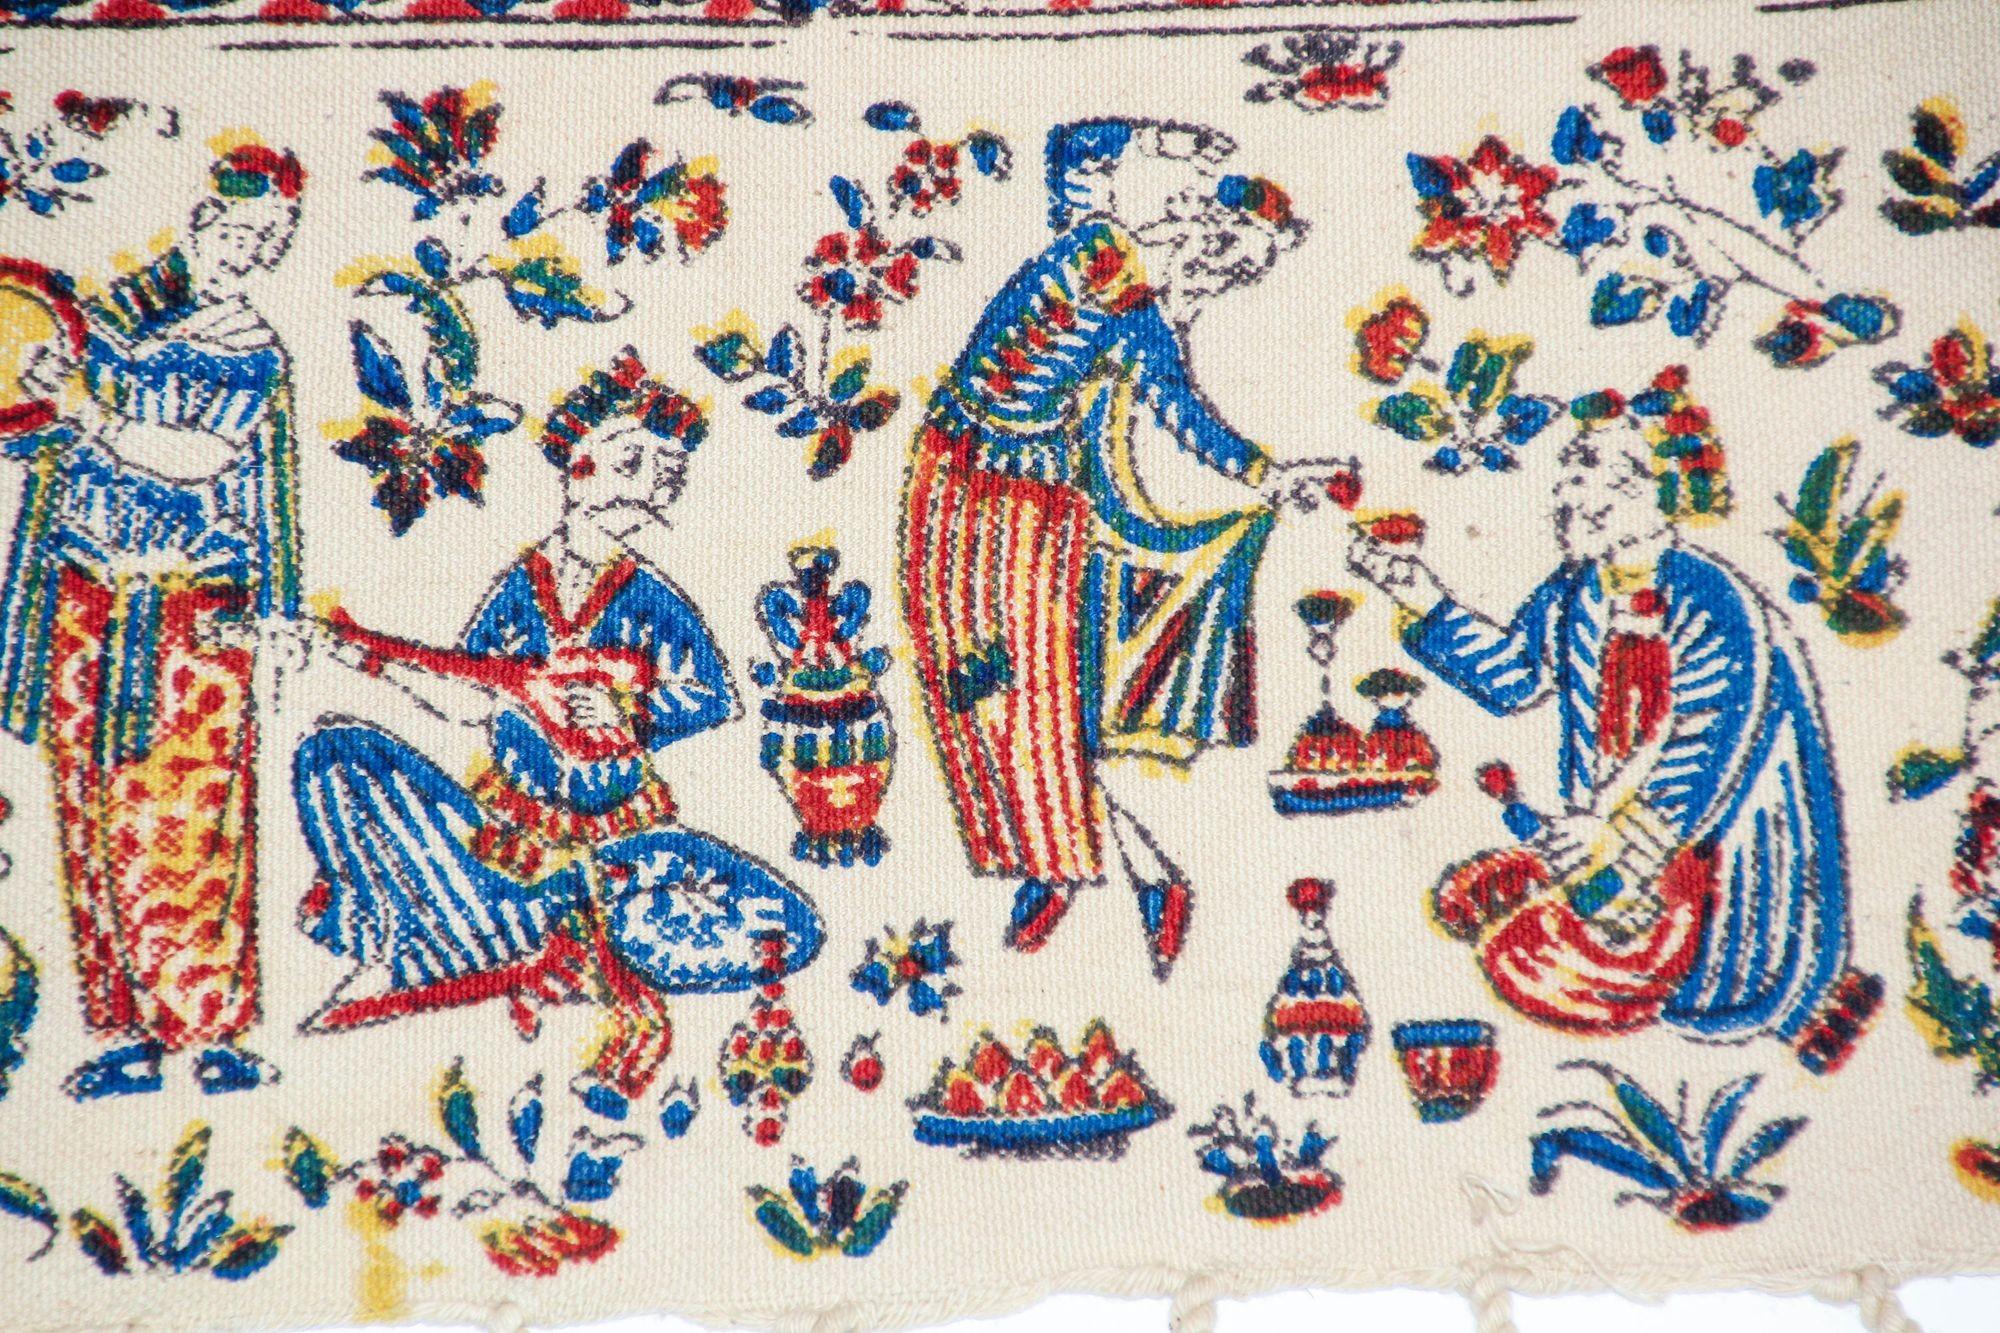 20th Century Persian Kalamkar Hand-Blocked Tapestry Textile Isfahan For Sale